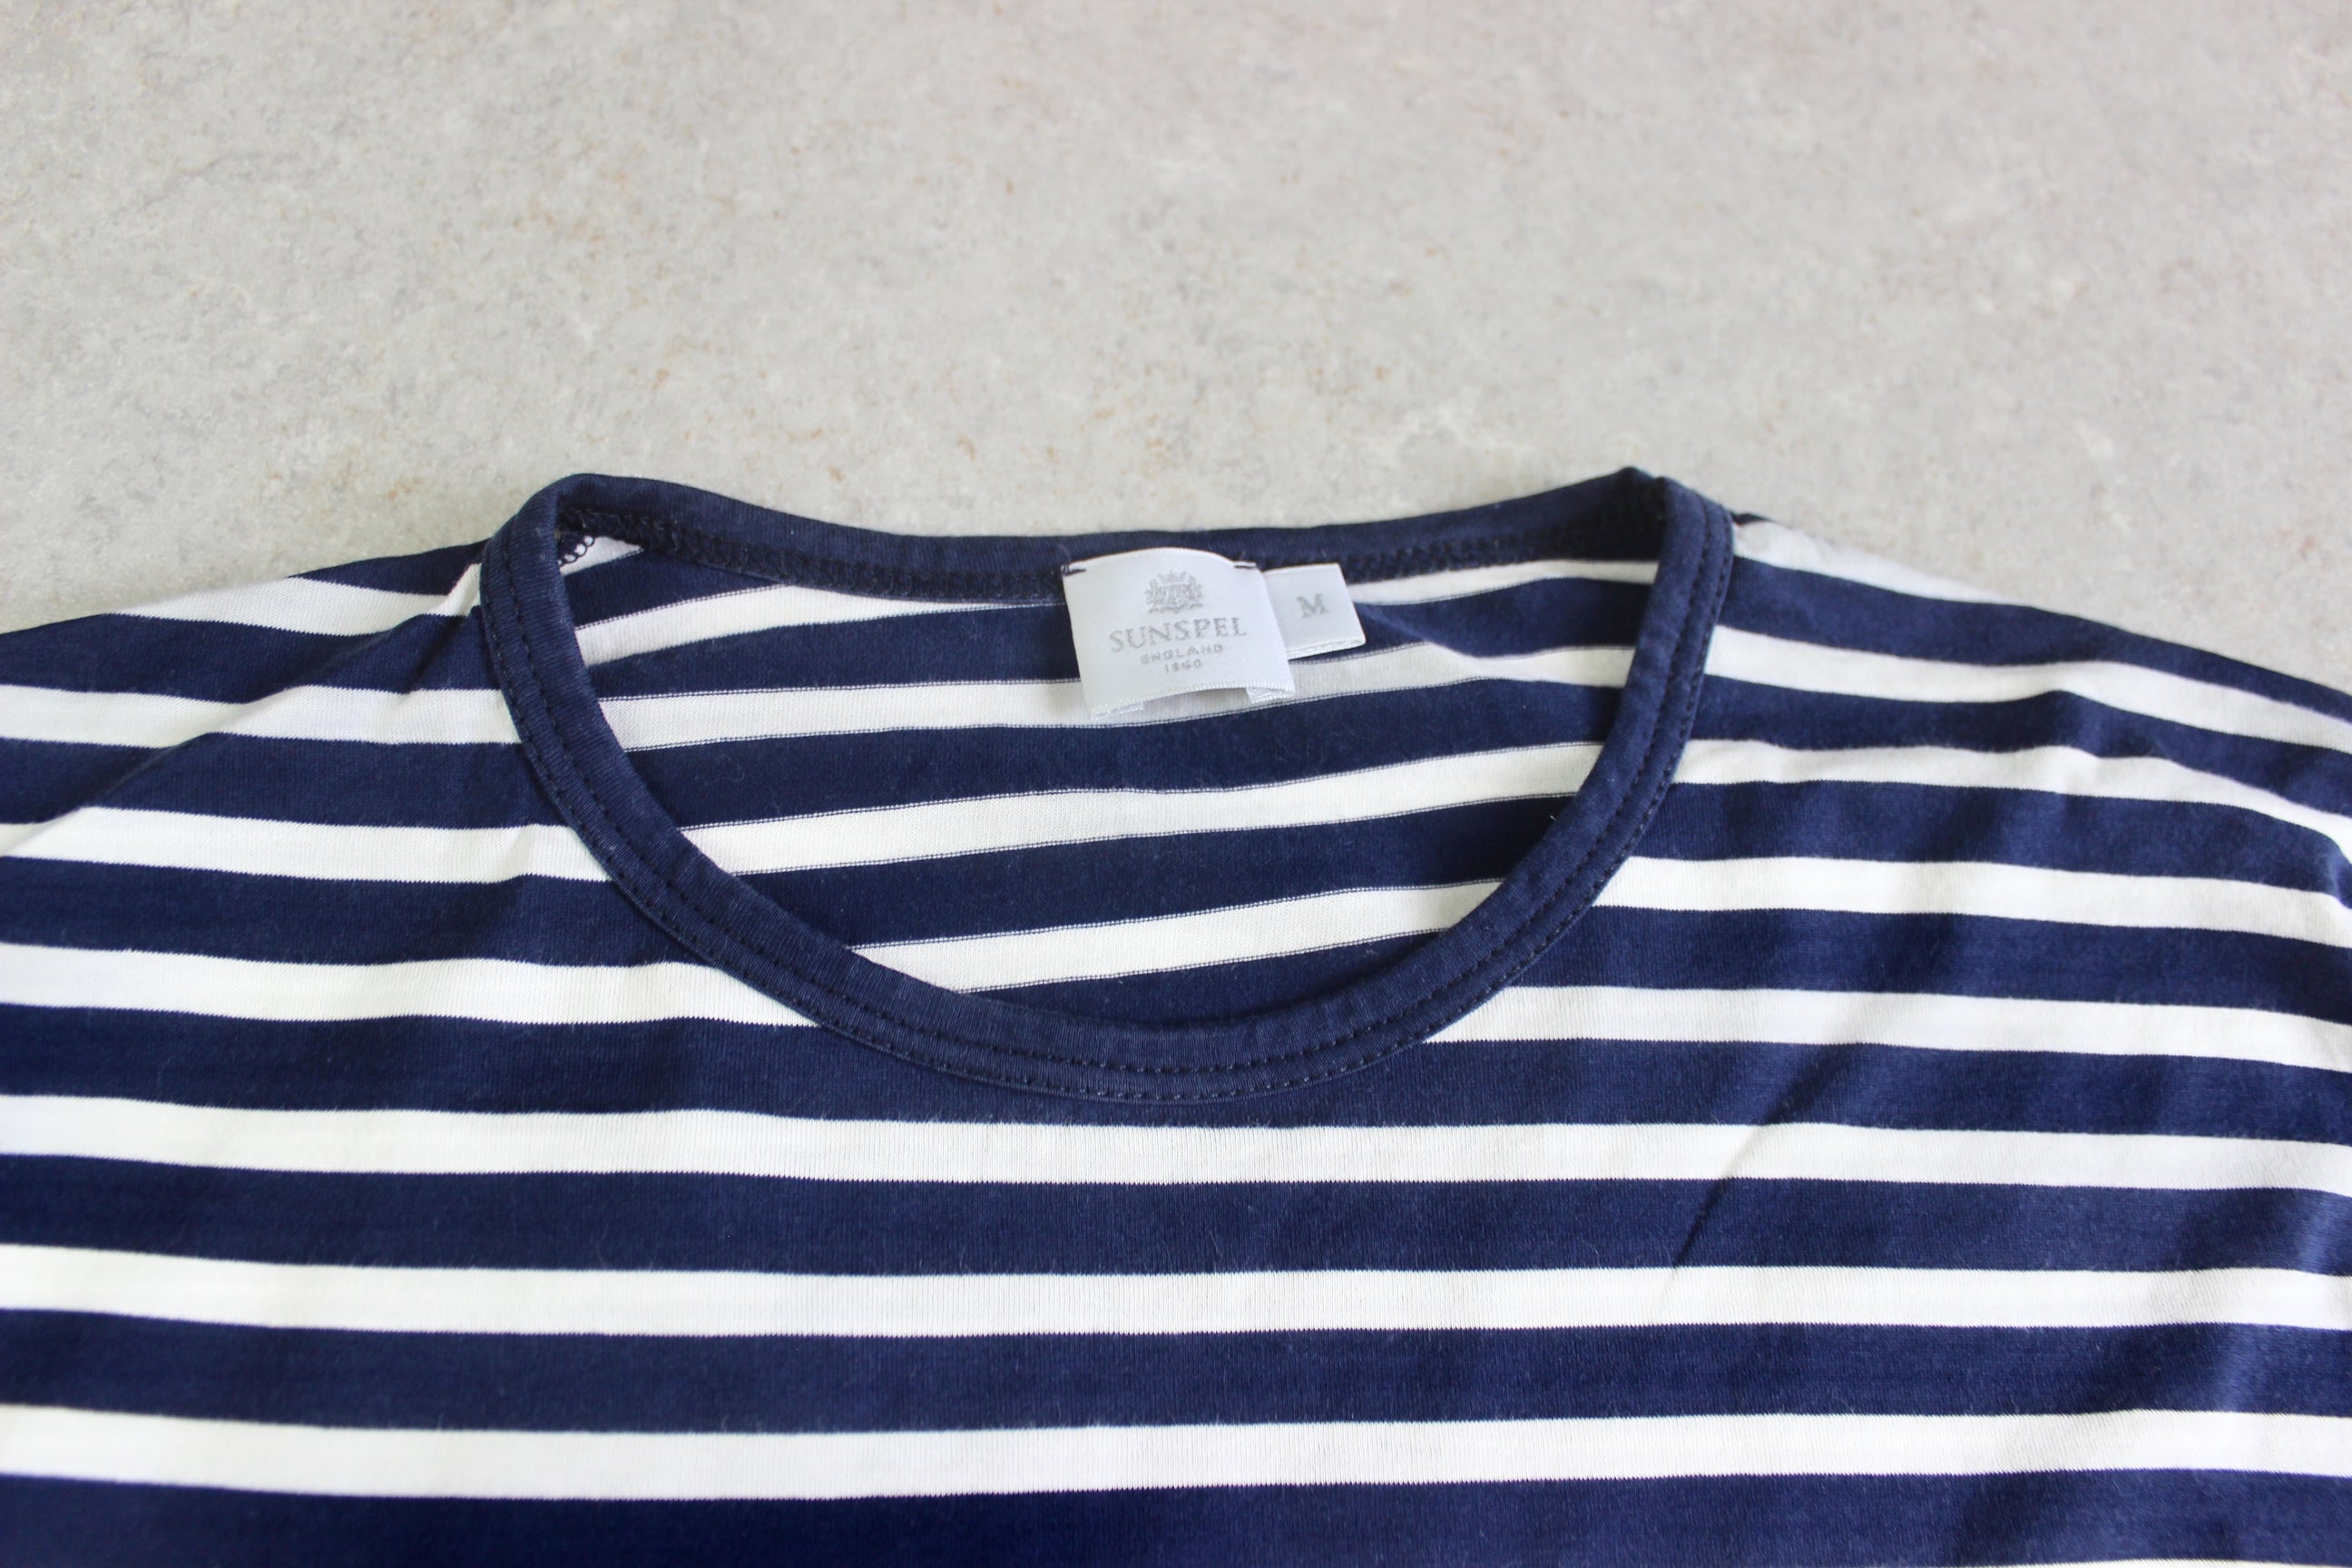 Sunspel - T Shirt - Navy Blue/White Stripe - Medium